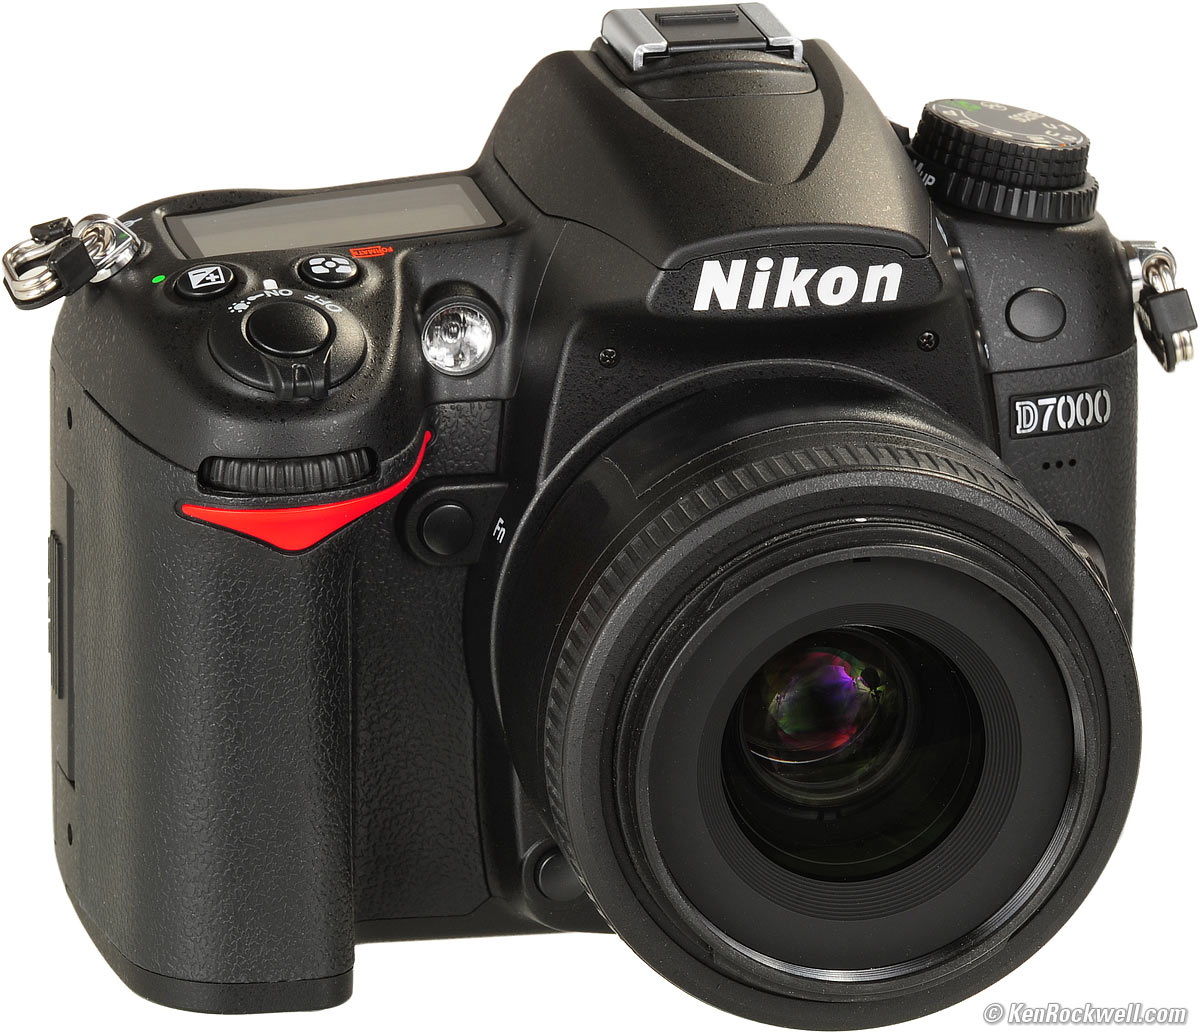 Nikon D7000 Specifications